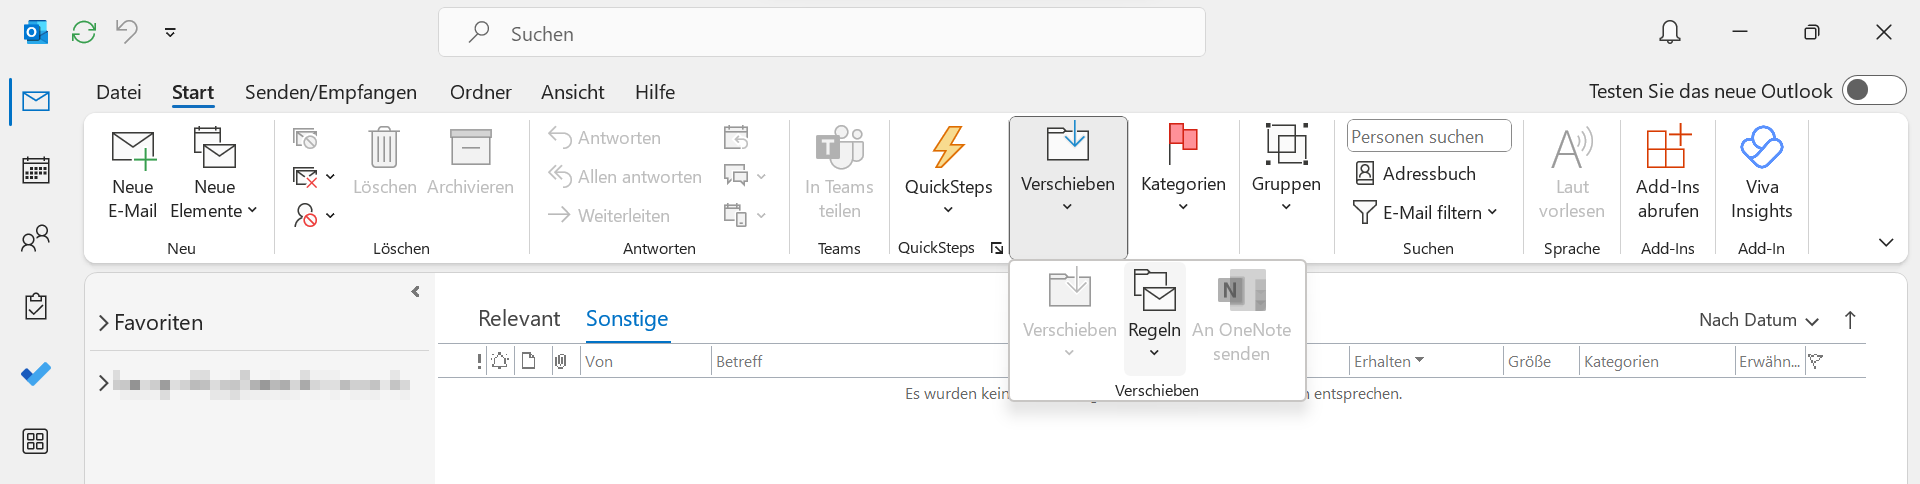 Menüleiste von Outlook 365 unter Windows